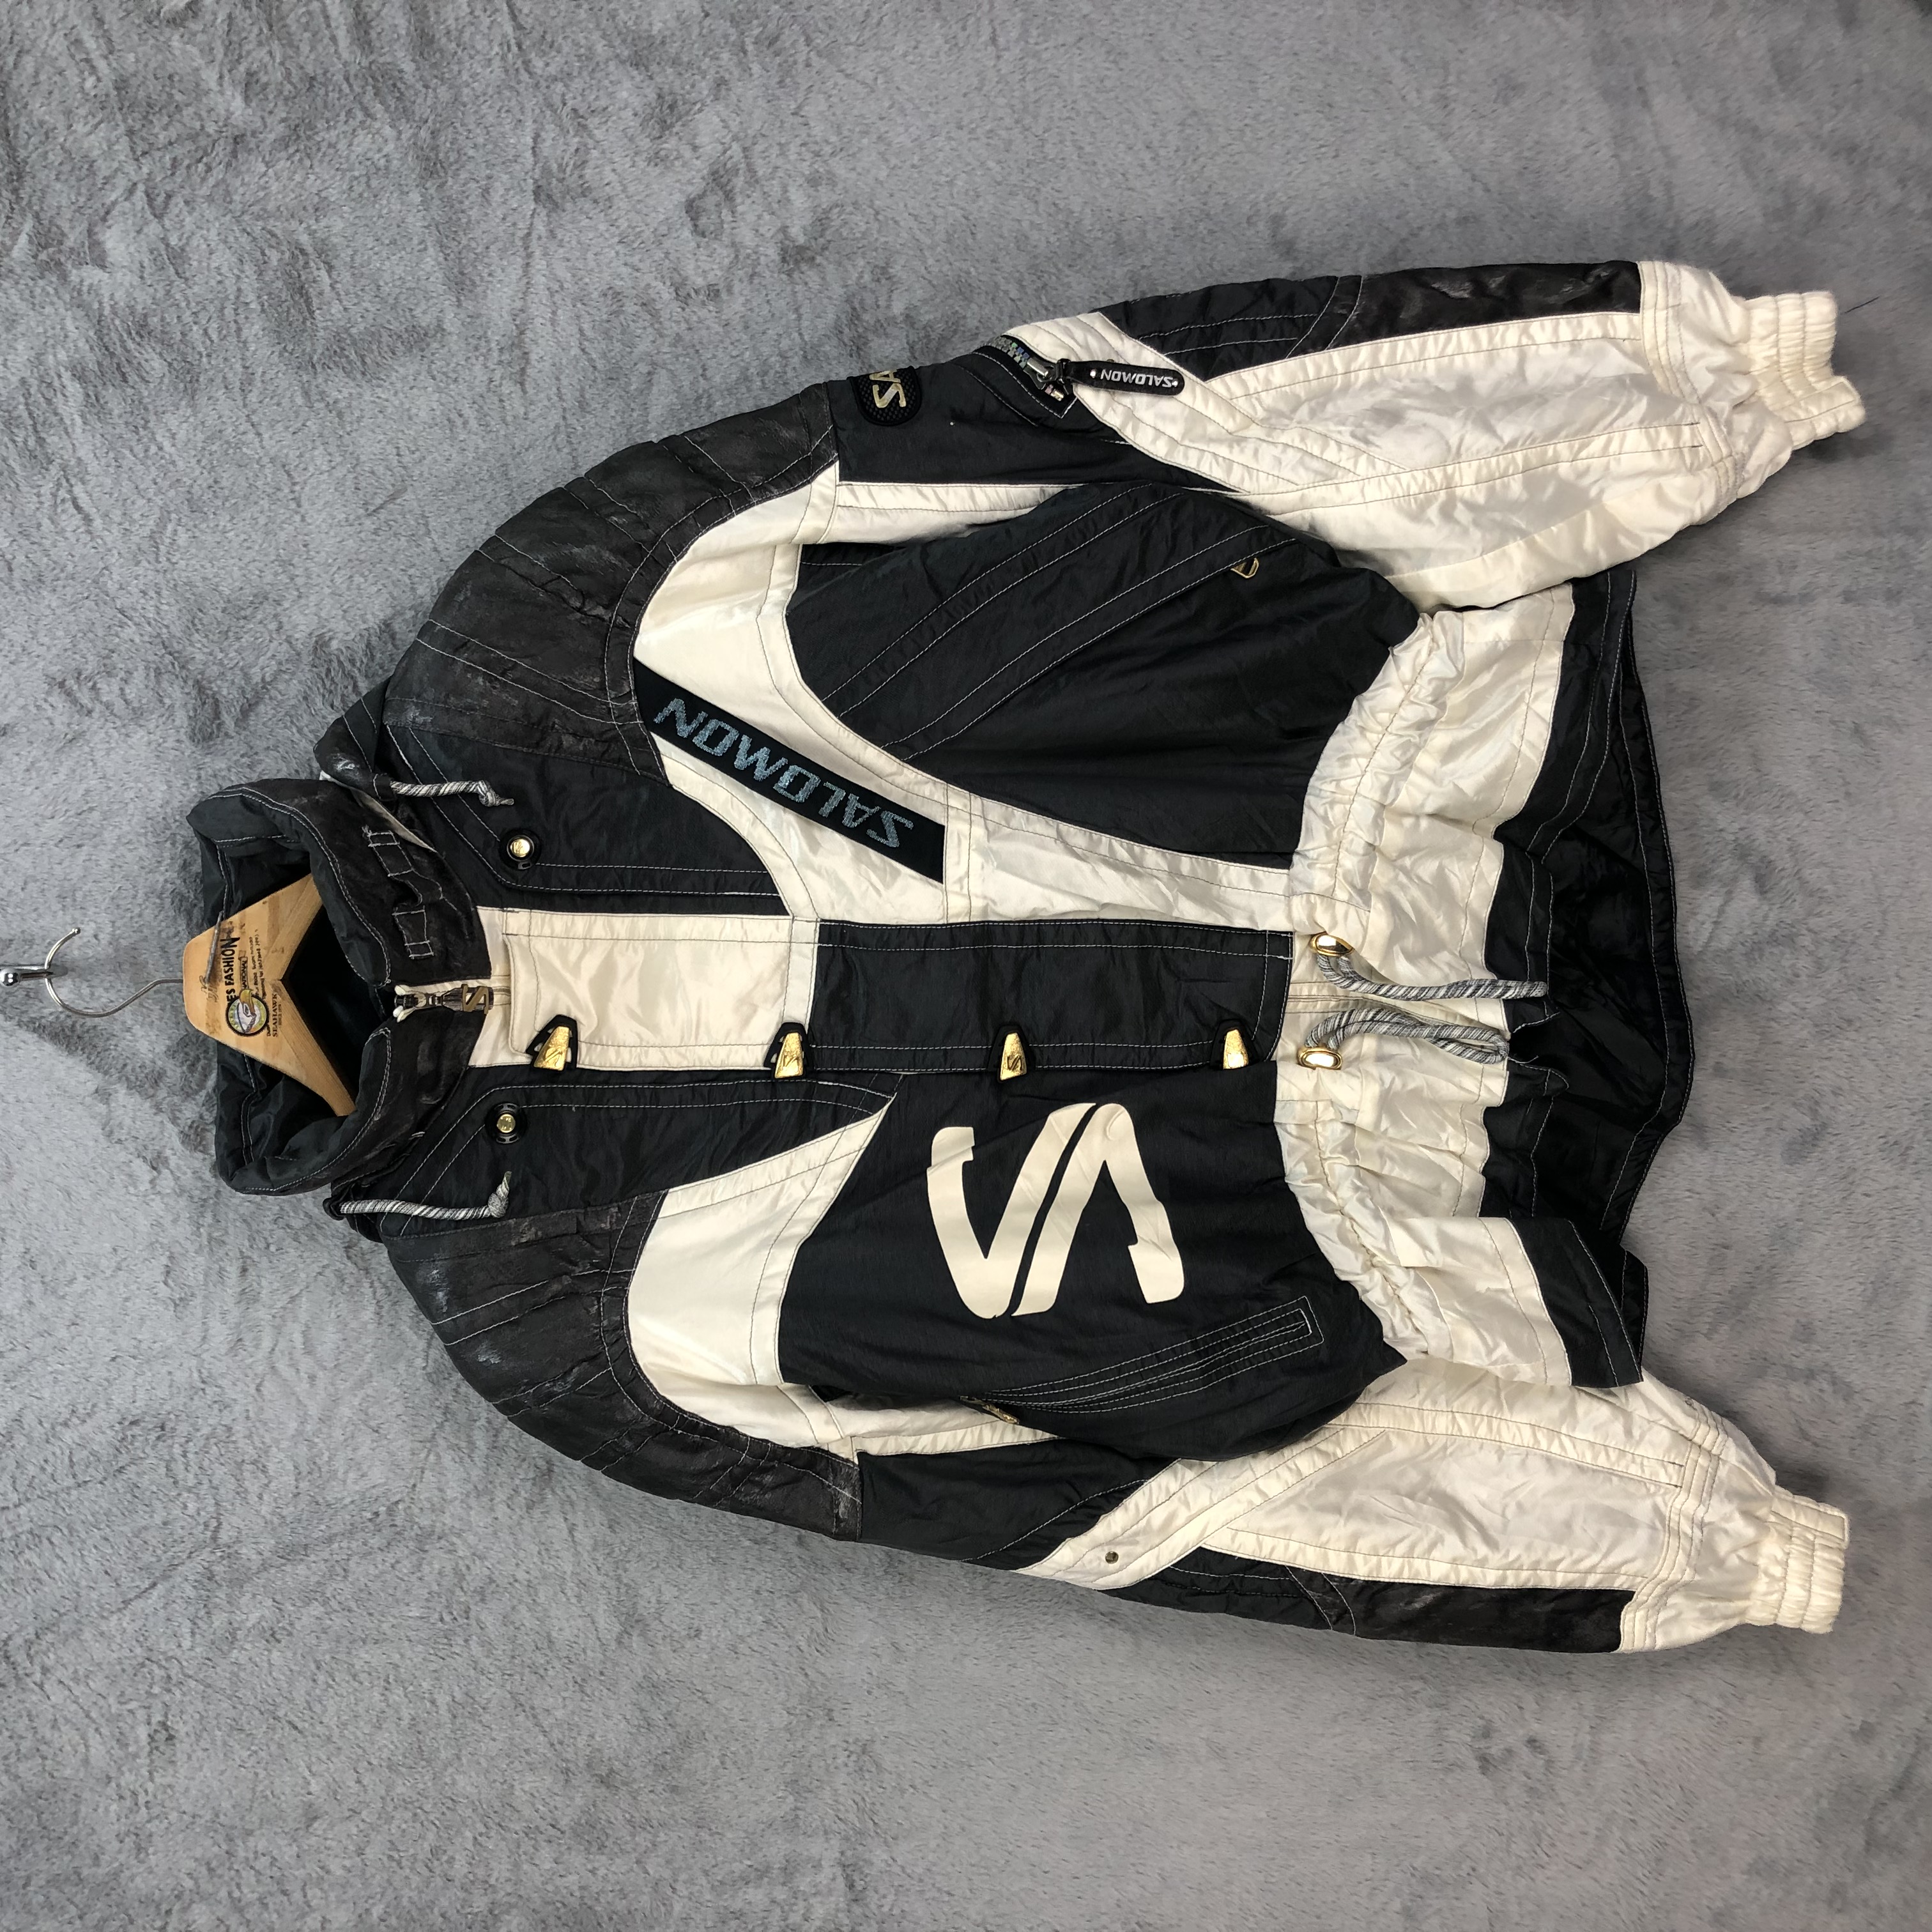 SALOMON Hooded Ski Jacket Skiwear #5164-177 - 1